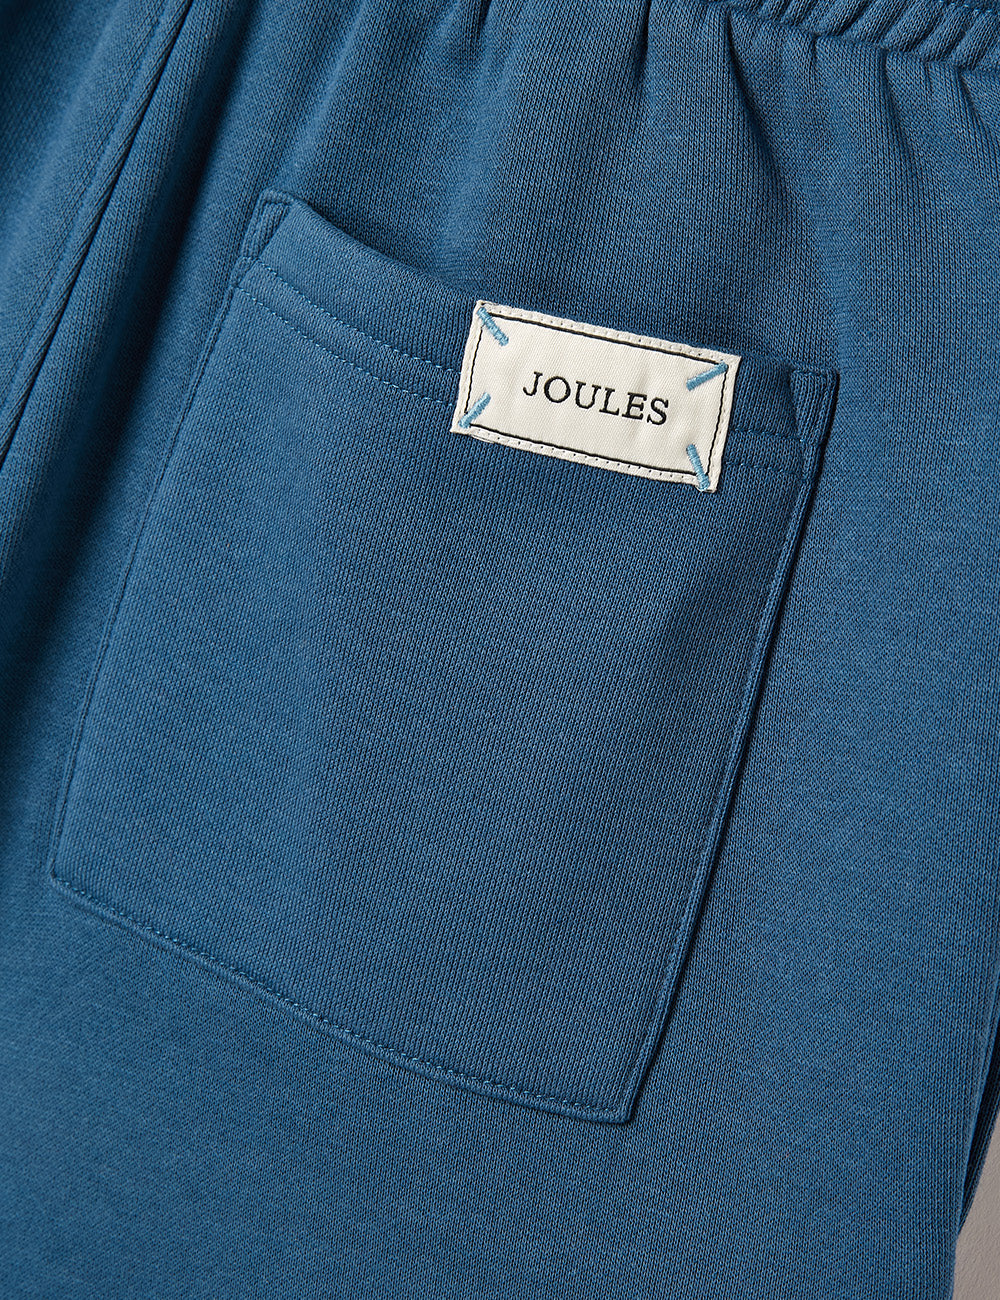 Joules Barton Jersey Short - Ink Blue